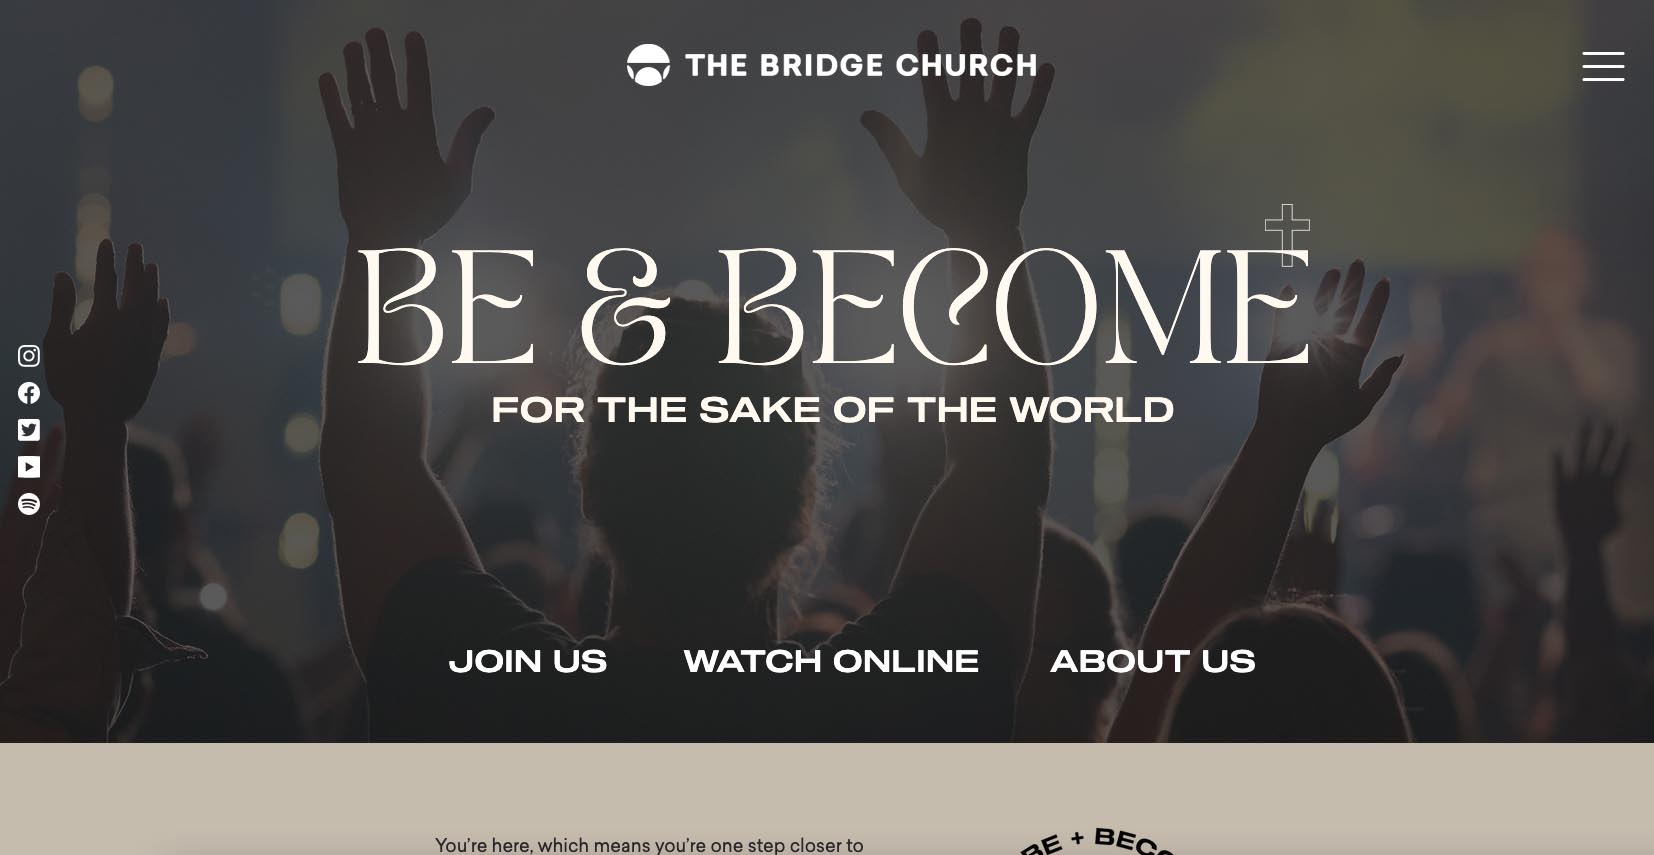 The bridge church homepage